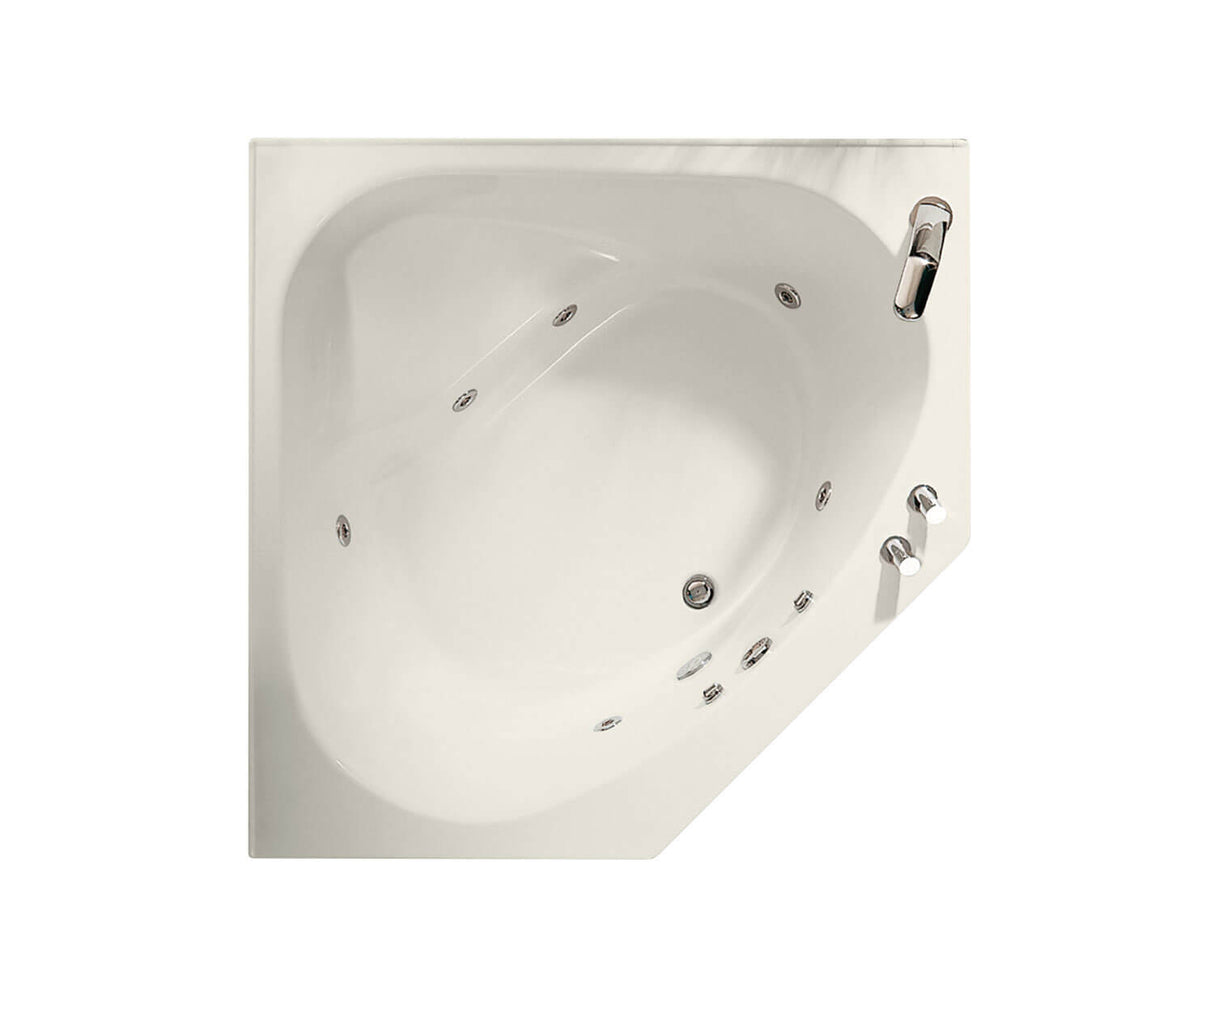 MAAX 100054-003-007-000 Tandem II 6060 Acrylic Corner Center Drain Whirlpool Bathtub in Biscuit